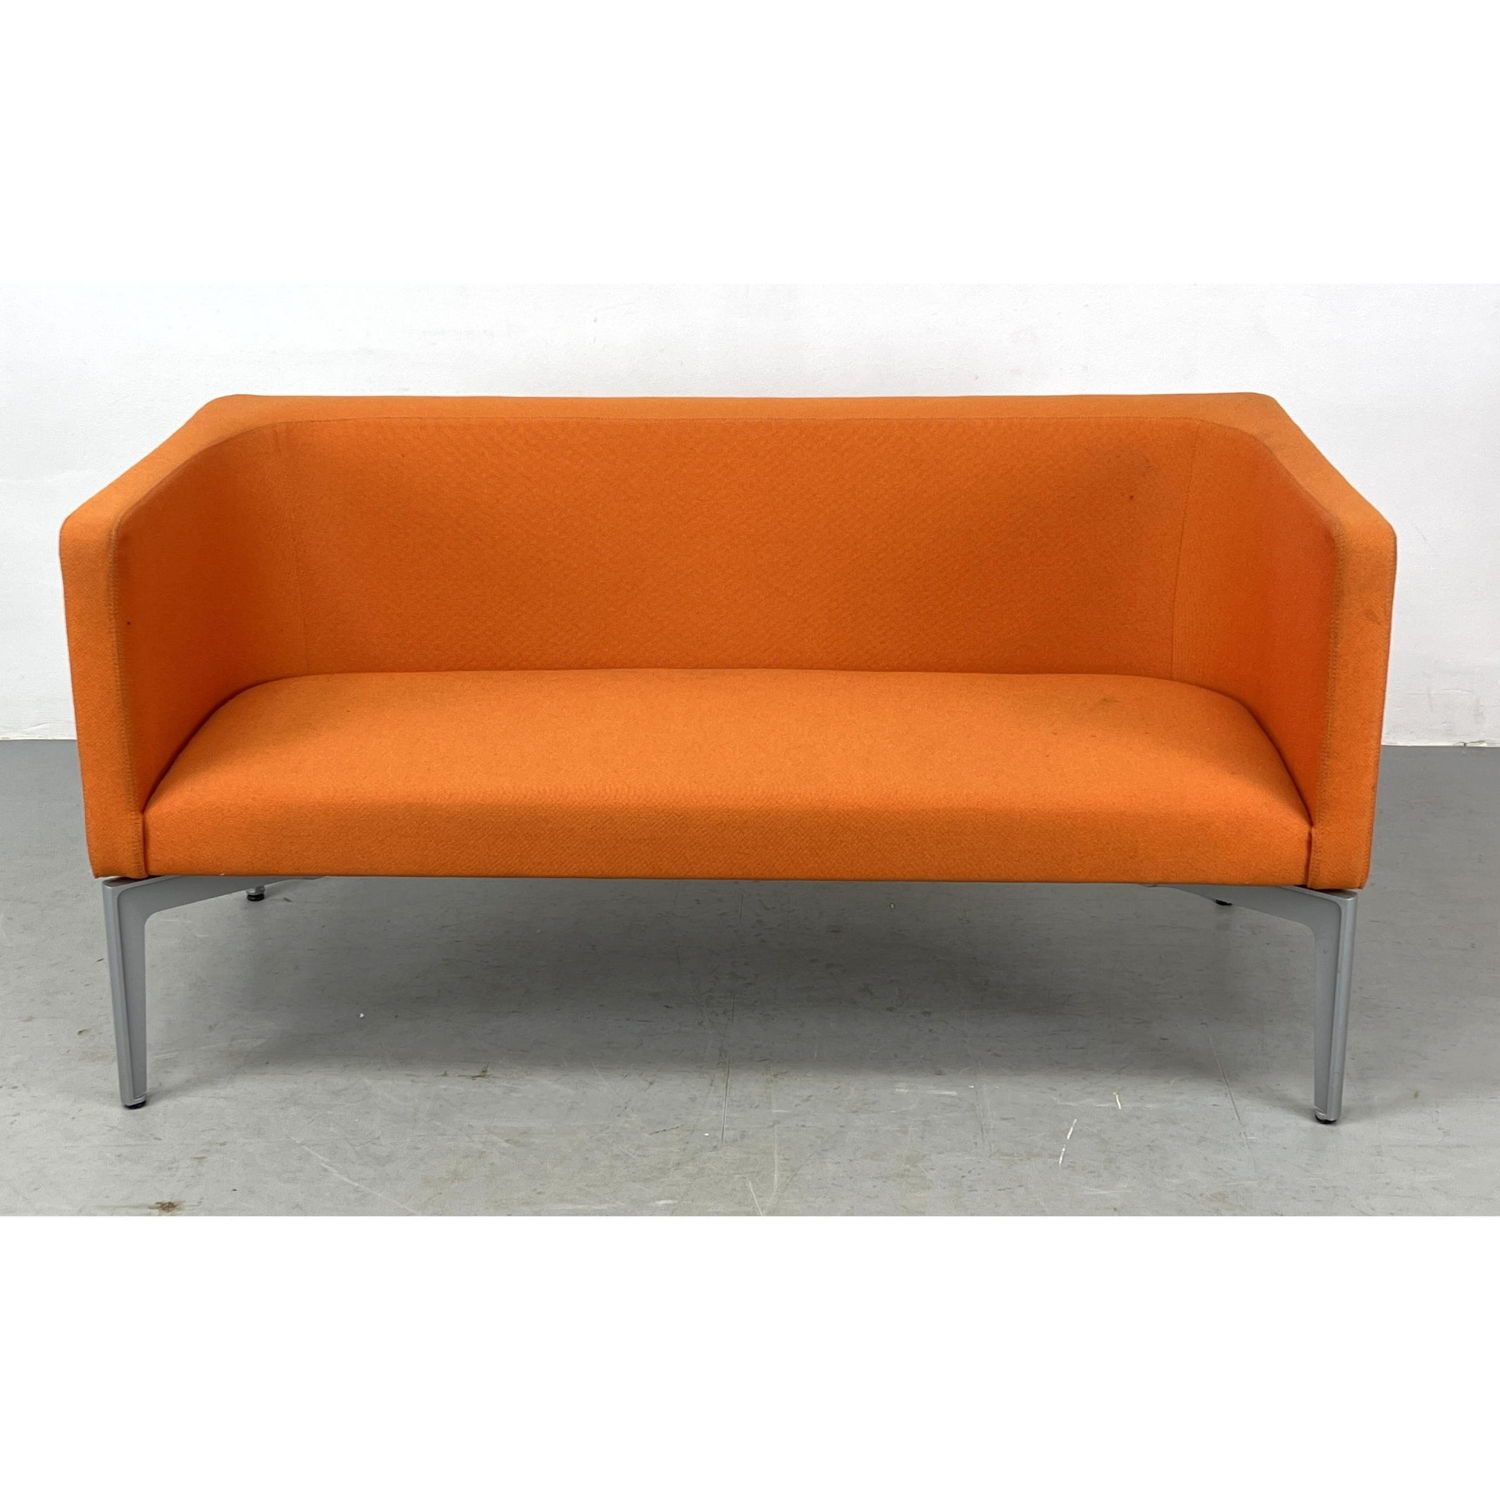 STEELCASE Orange Modernist Sofa 2ff3c5